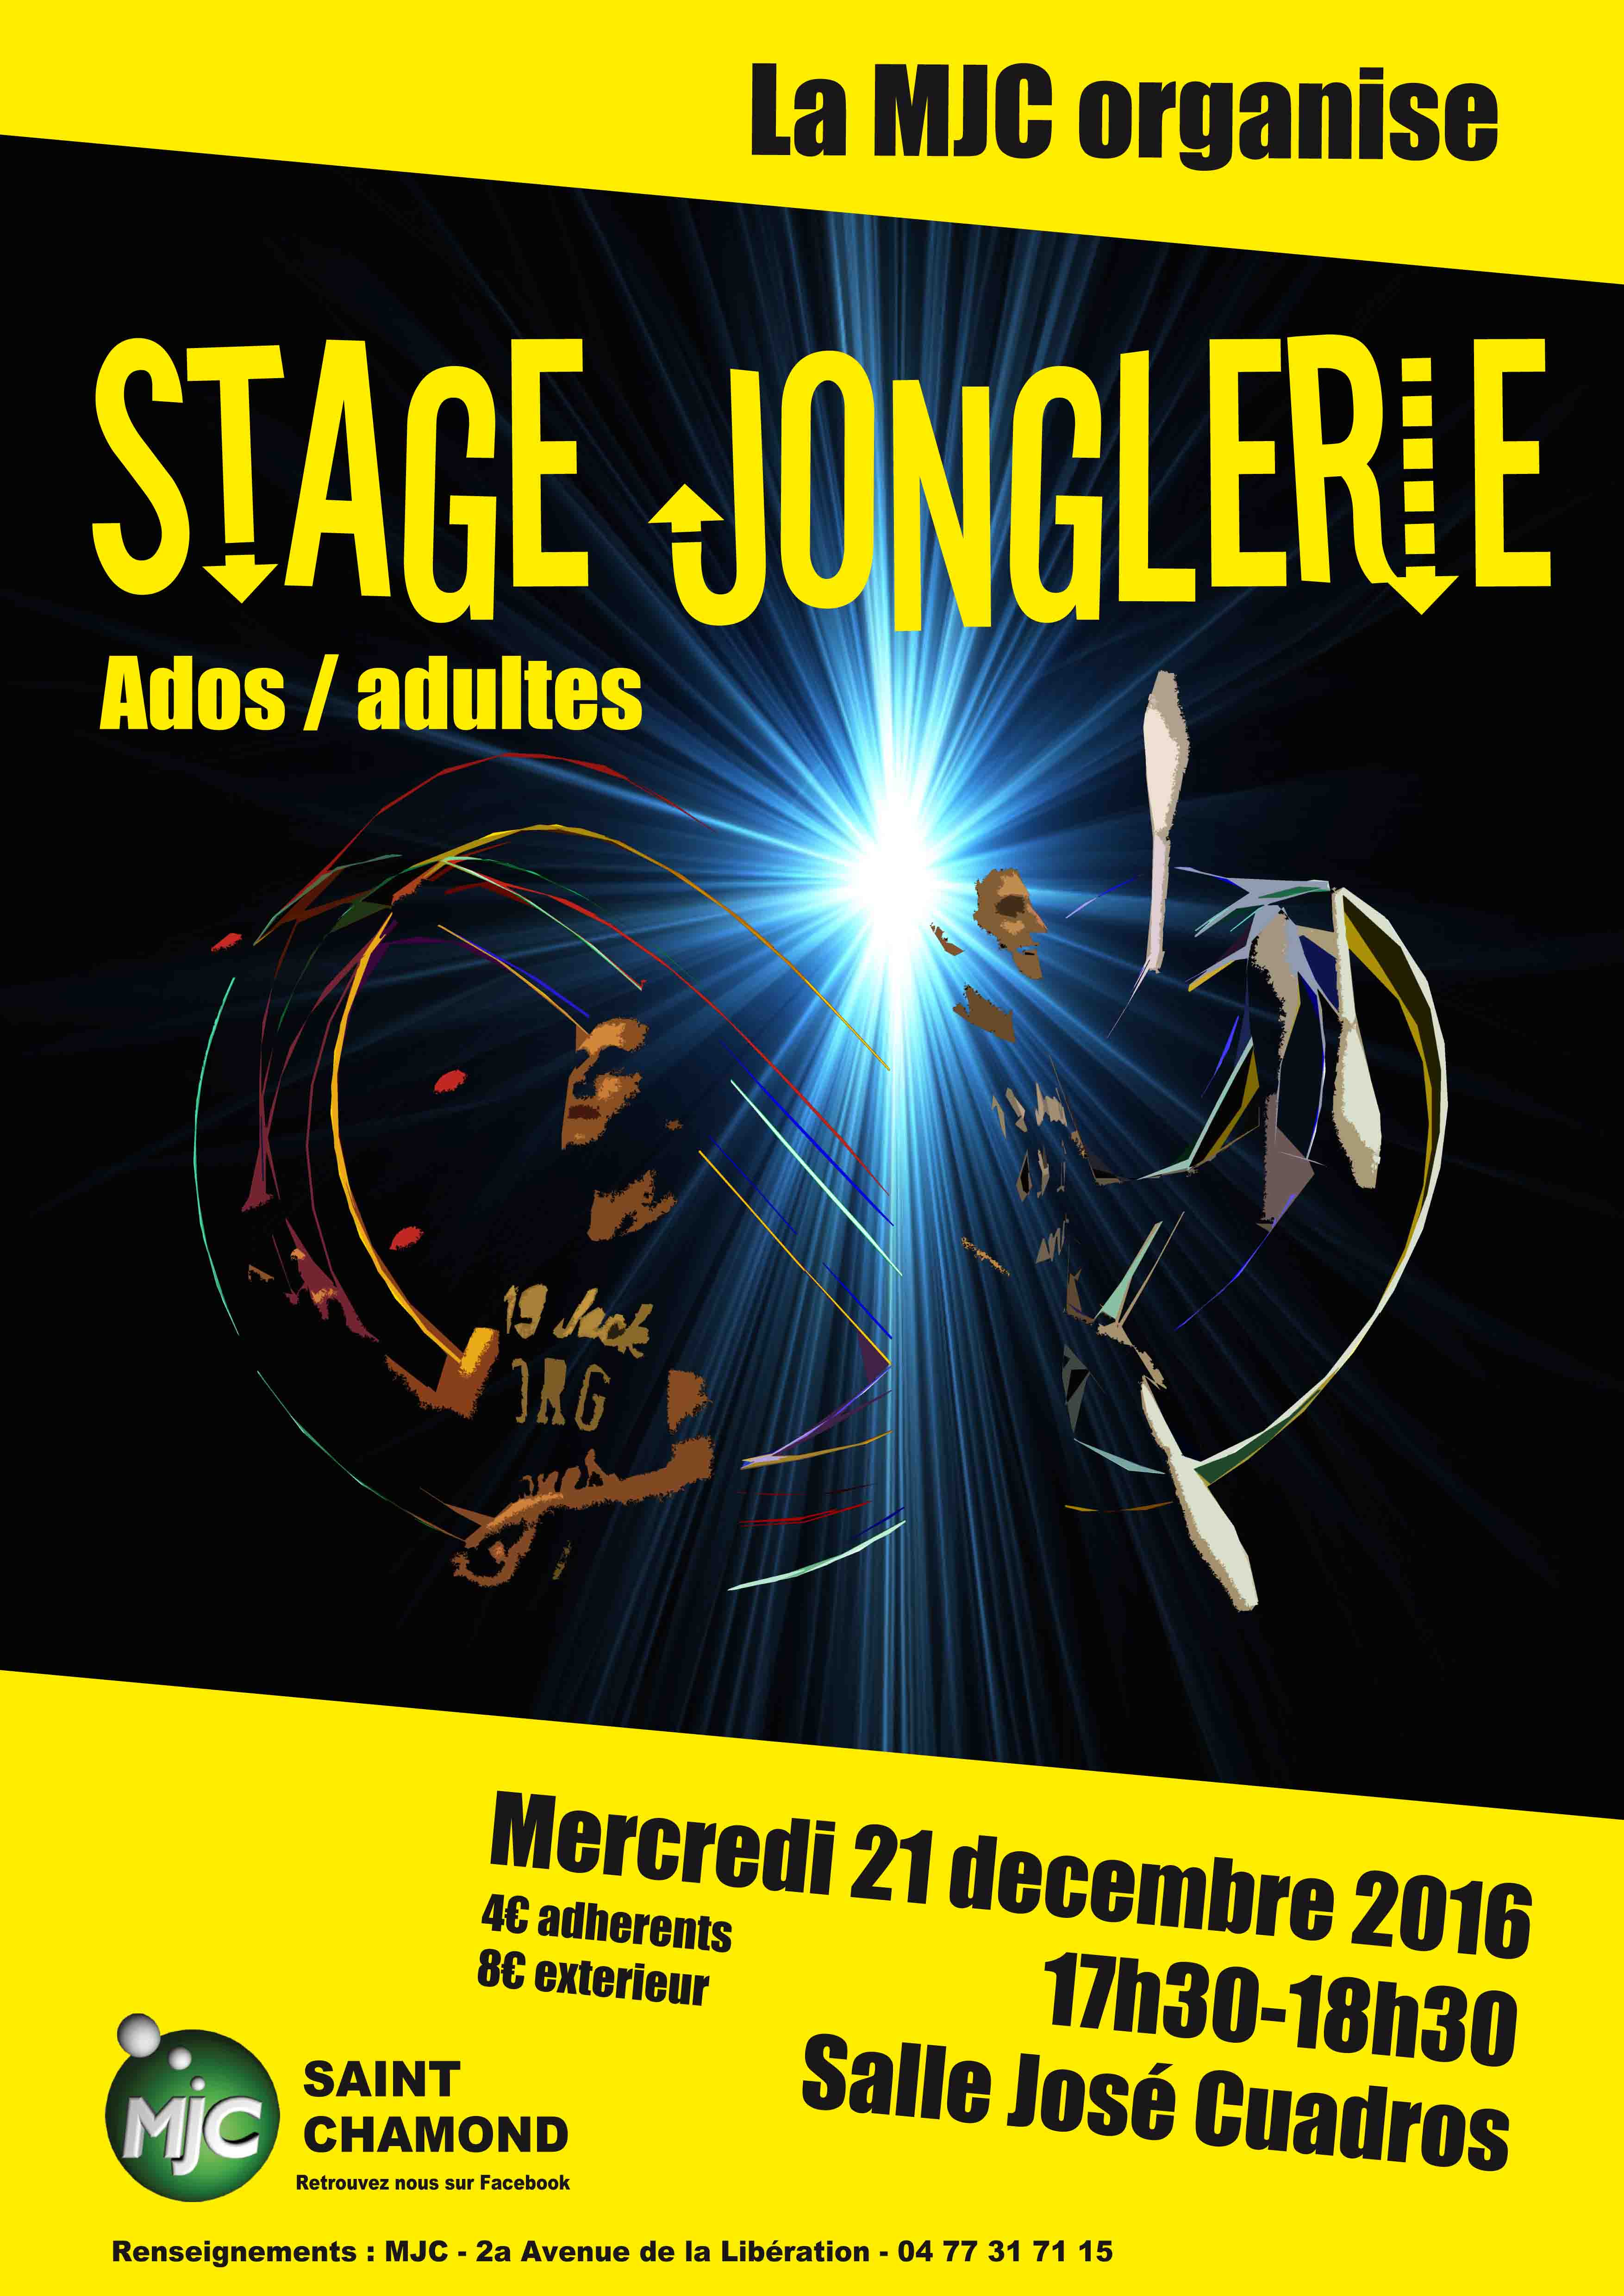 stage_jonglerie